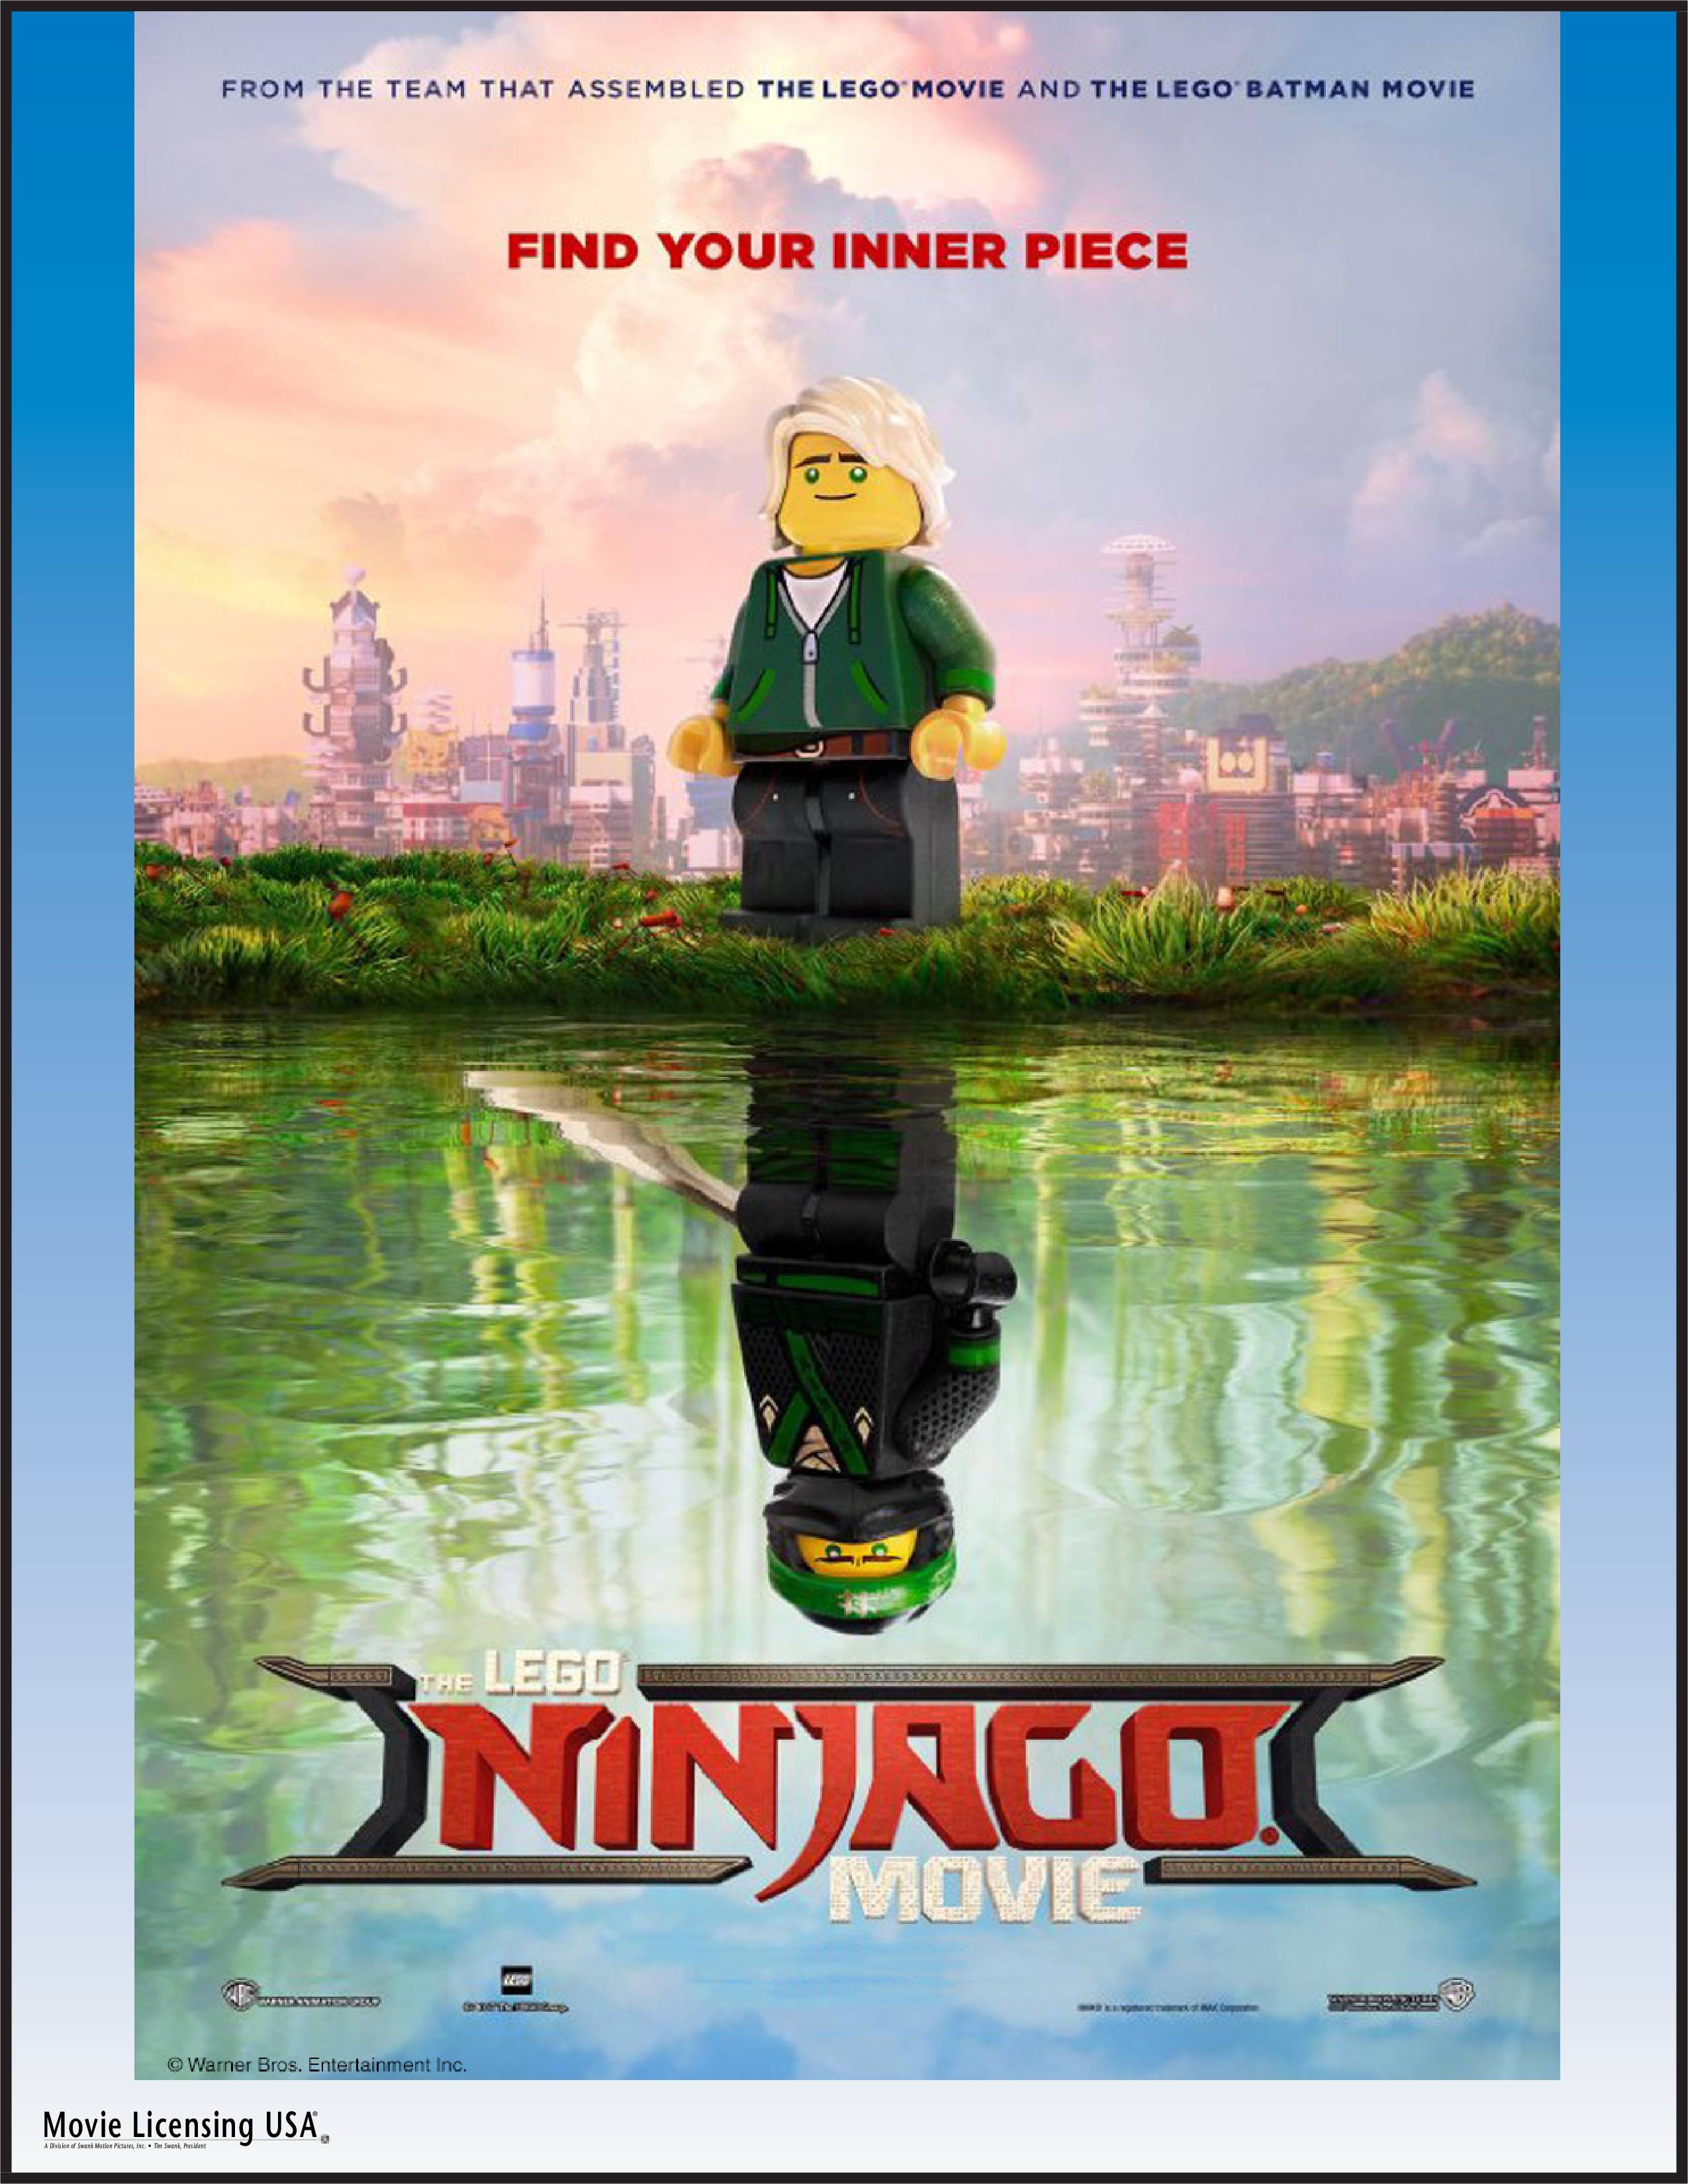 THE_LEGO_NINJAGO_MOVIE_poster.jpg